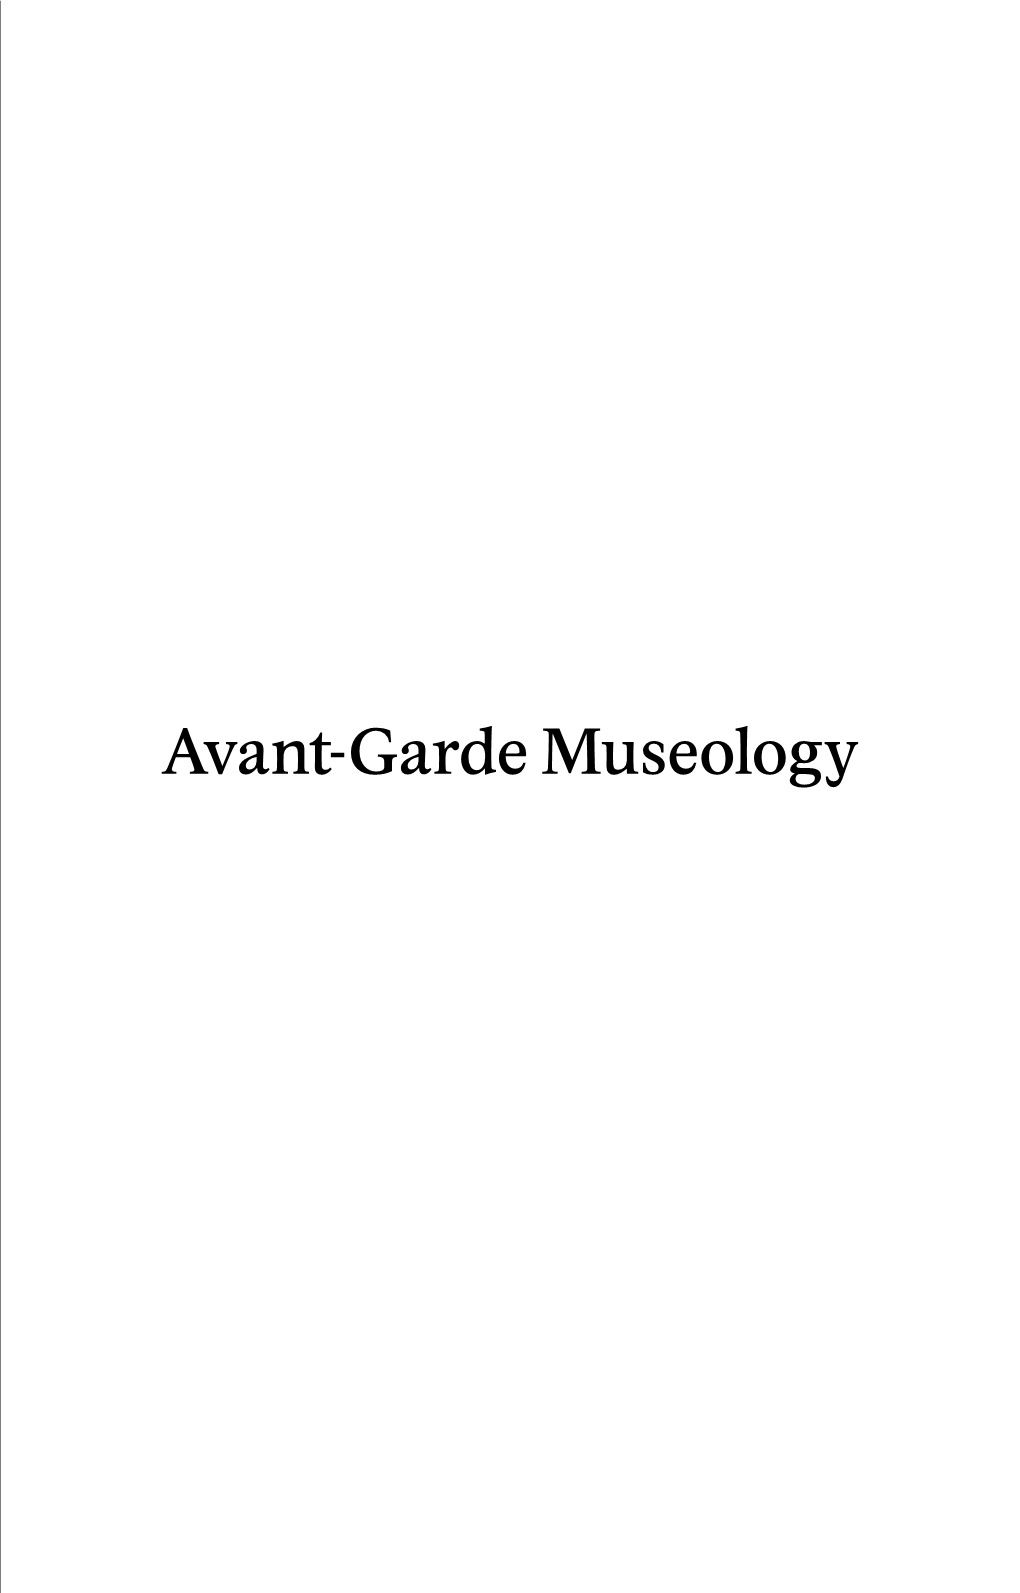 Avant-Garde Museology E-Flux Classics